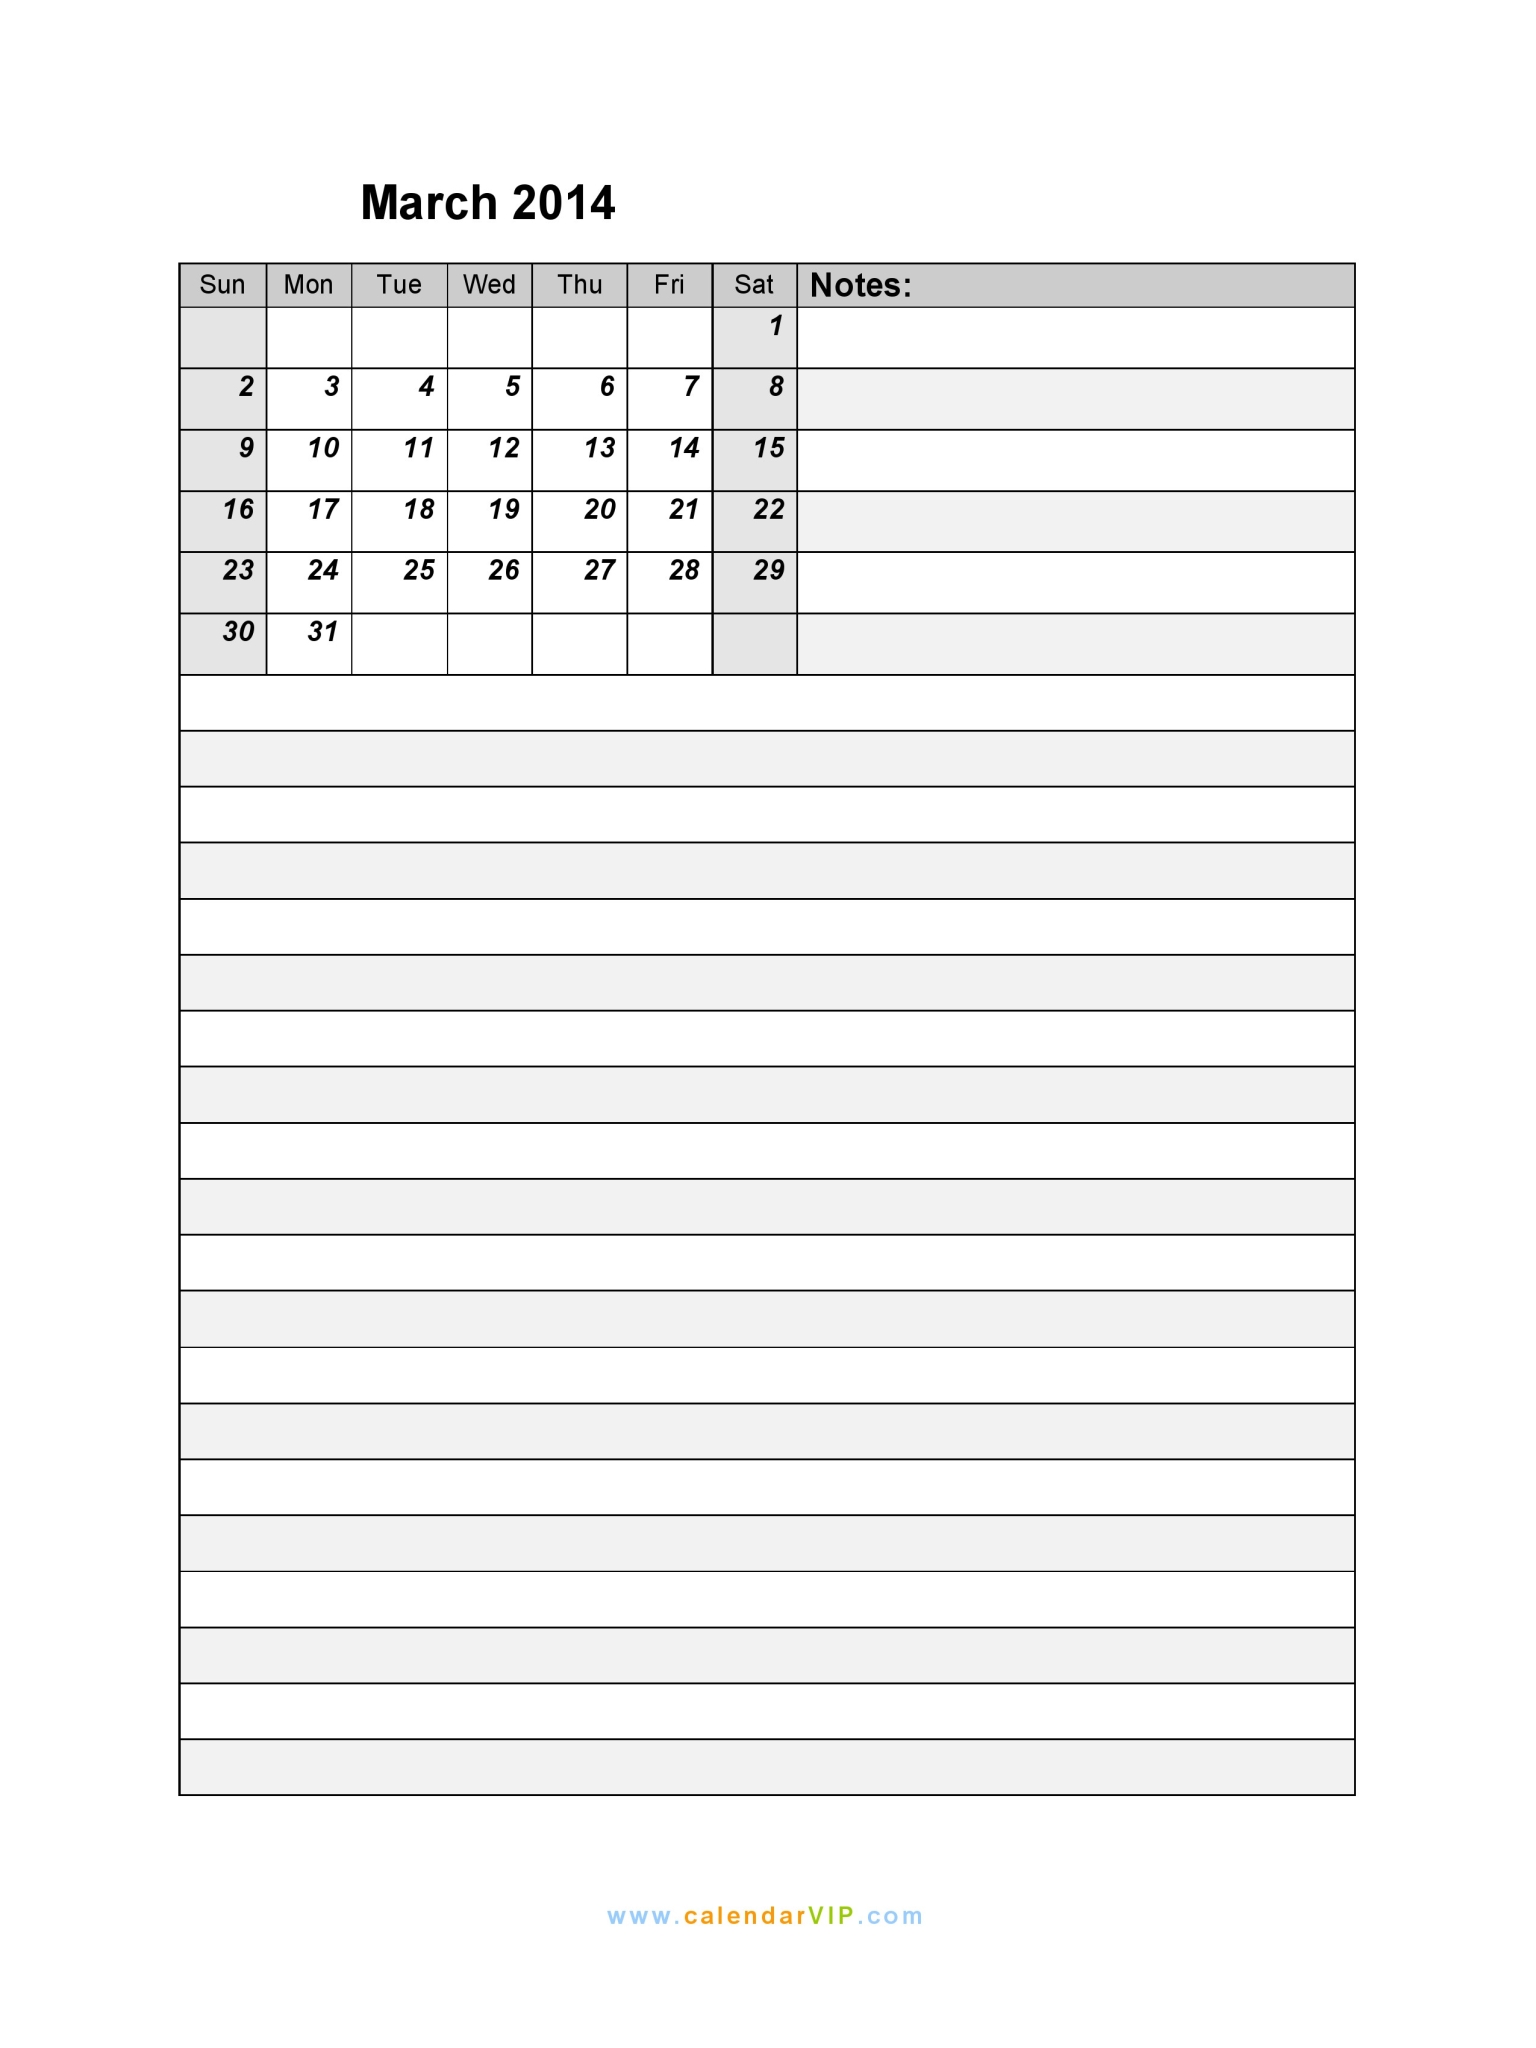 March 2014 Calendar Blank Printable Calendar Template In Pdf Word Excel